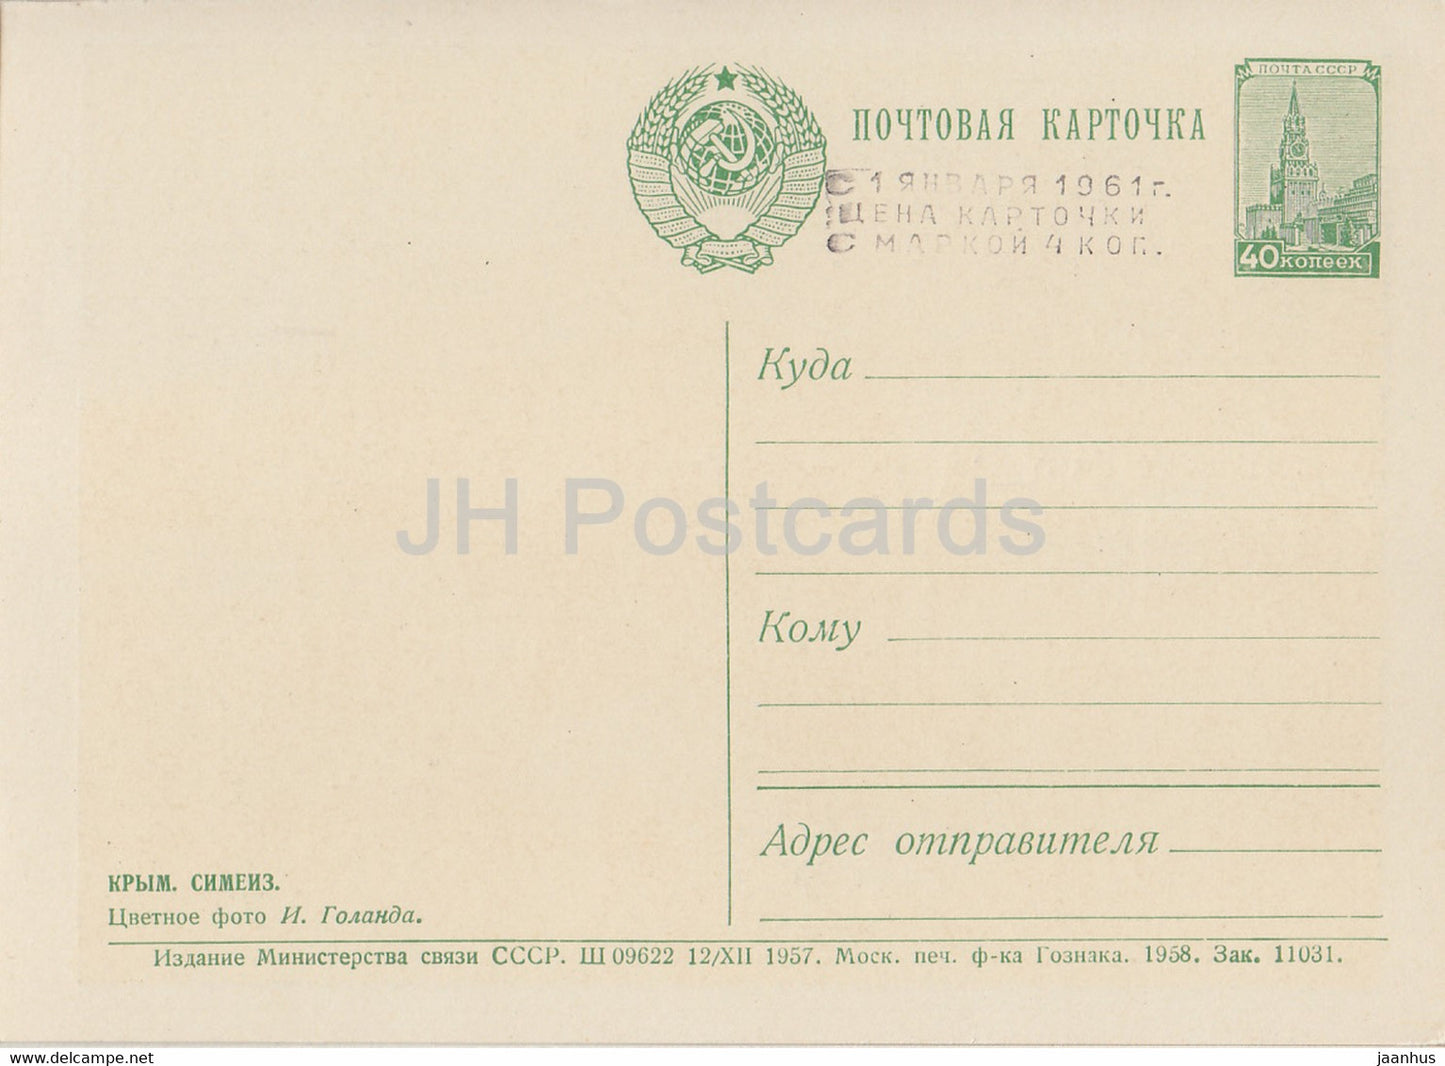 Simeiz - Crimée - entier postal - carte postale ancienne - 1957 - Ukraine URSS - inutilisé